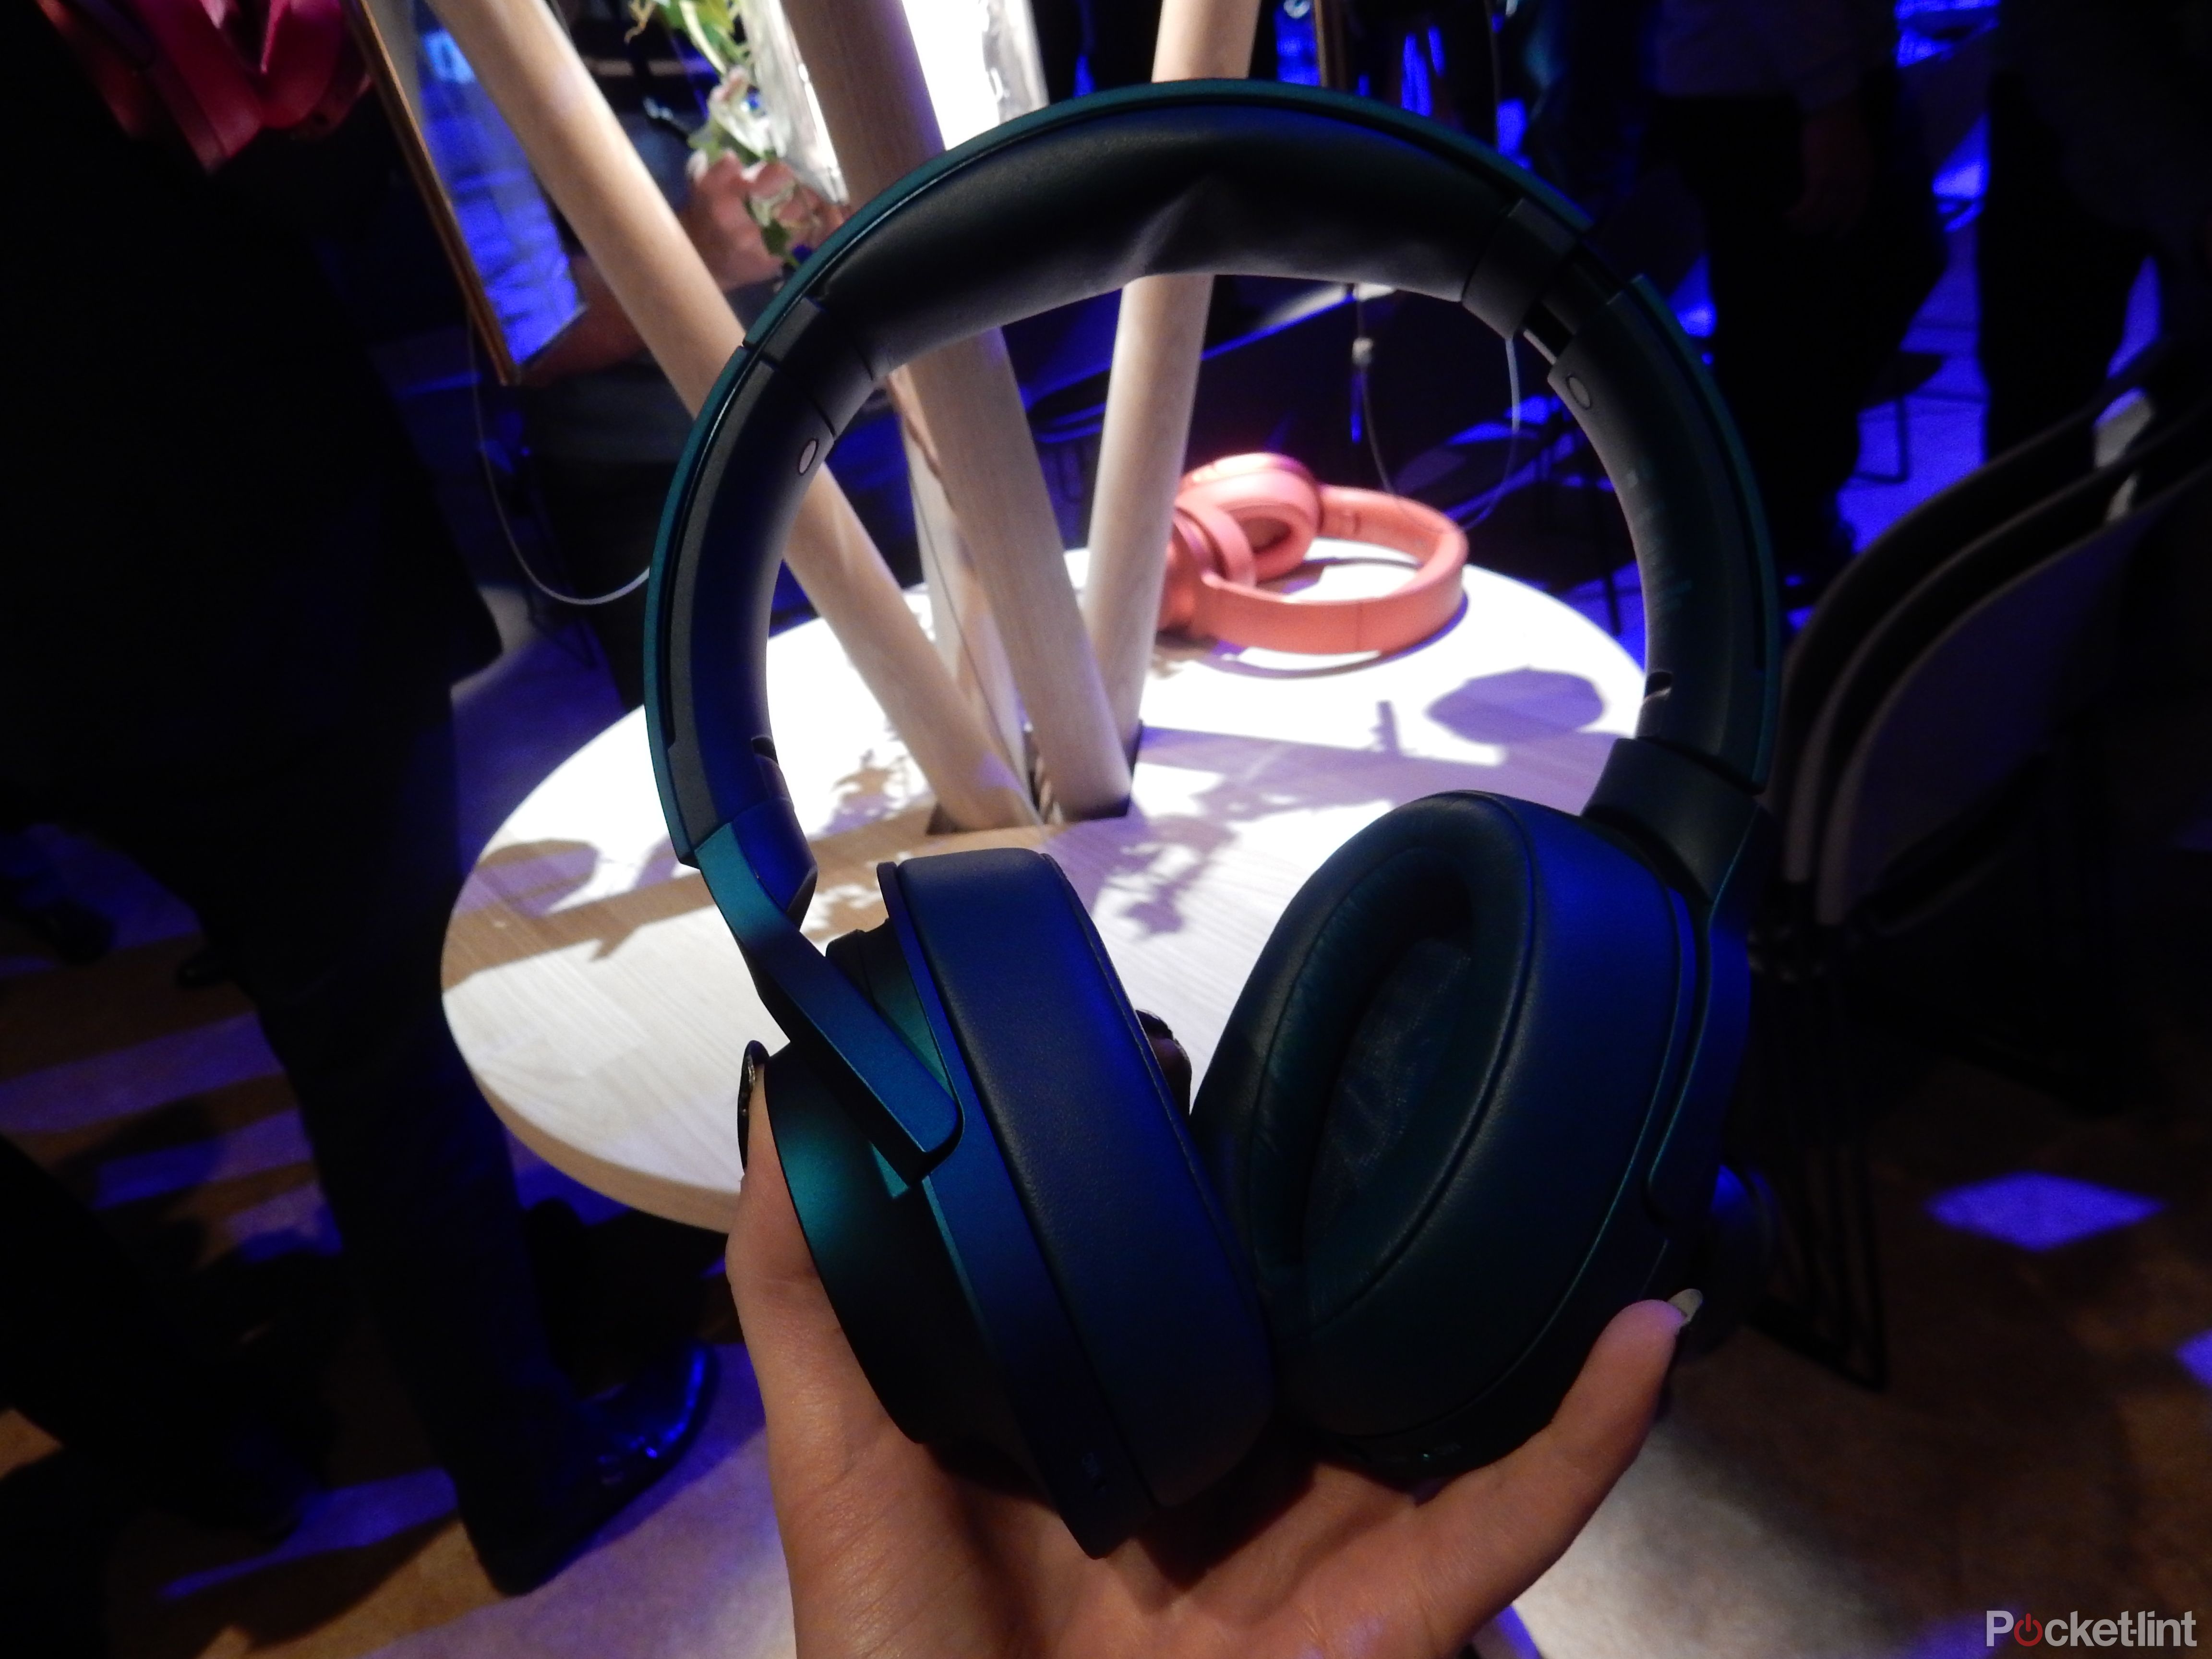 sony s hi res audio range adds new h ear wireless speakers headphones plus a turntable image 34